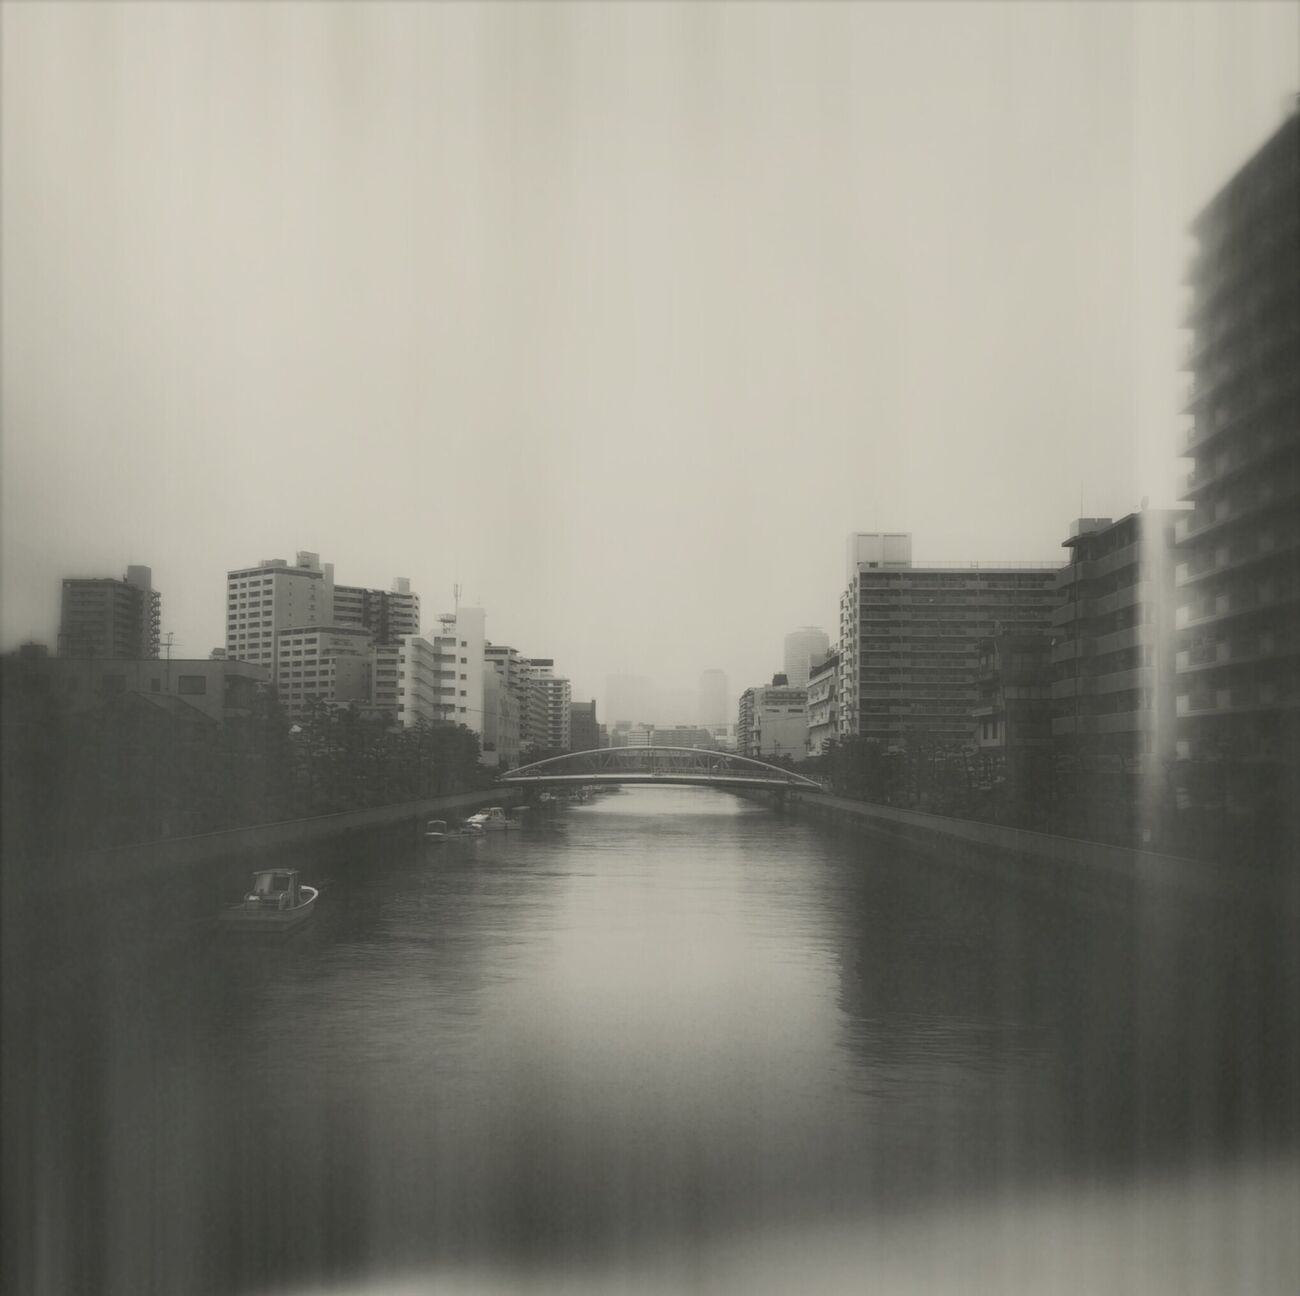 Tatekawa River, Tokyo, Japon. Juillet 2014. Ref-1295 - Denis Olivier Photographie